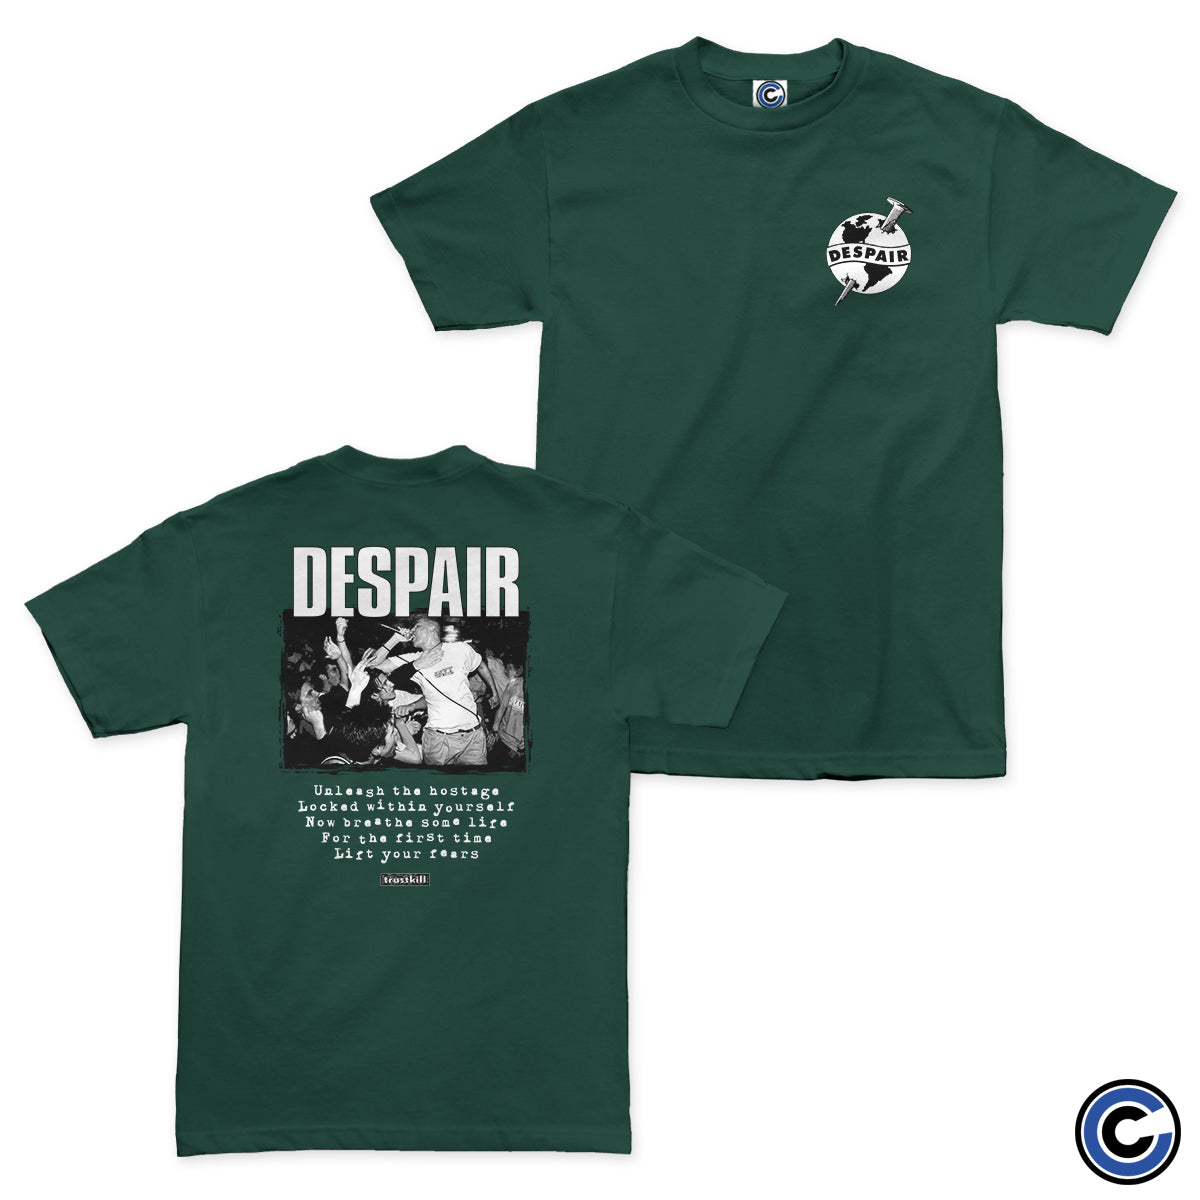 Despair "Live" Shirt